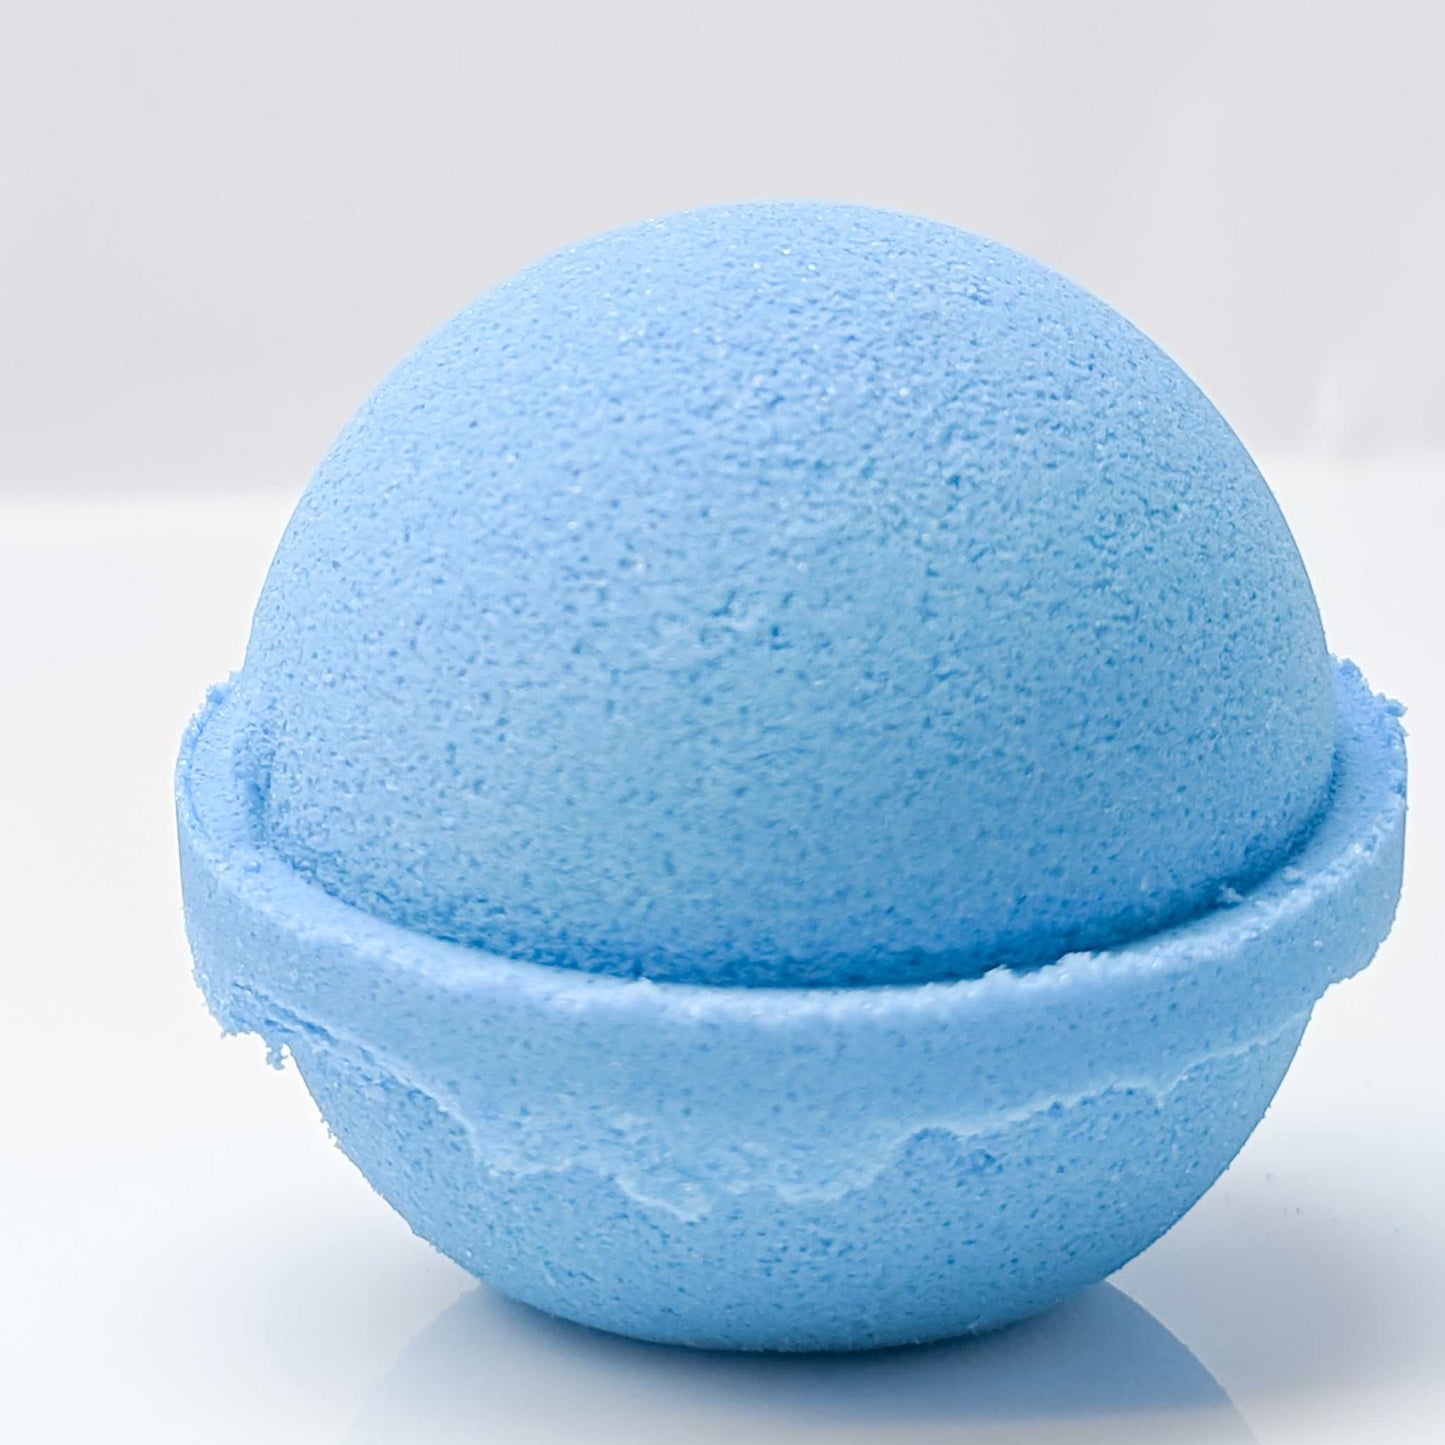 Bay Rum bath bomb, showcasing CG Pure Wash's dedication to eco-friendly bath products | CG Pure Wash